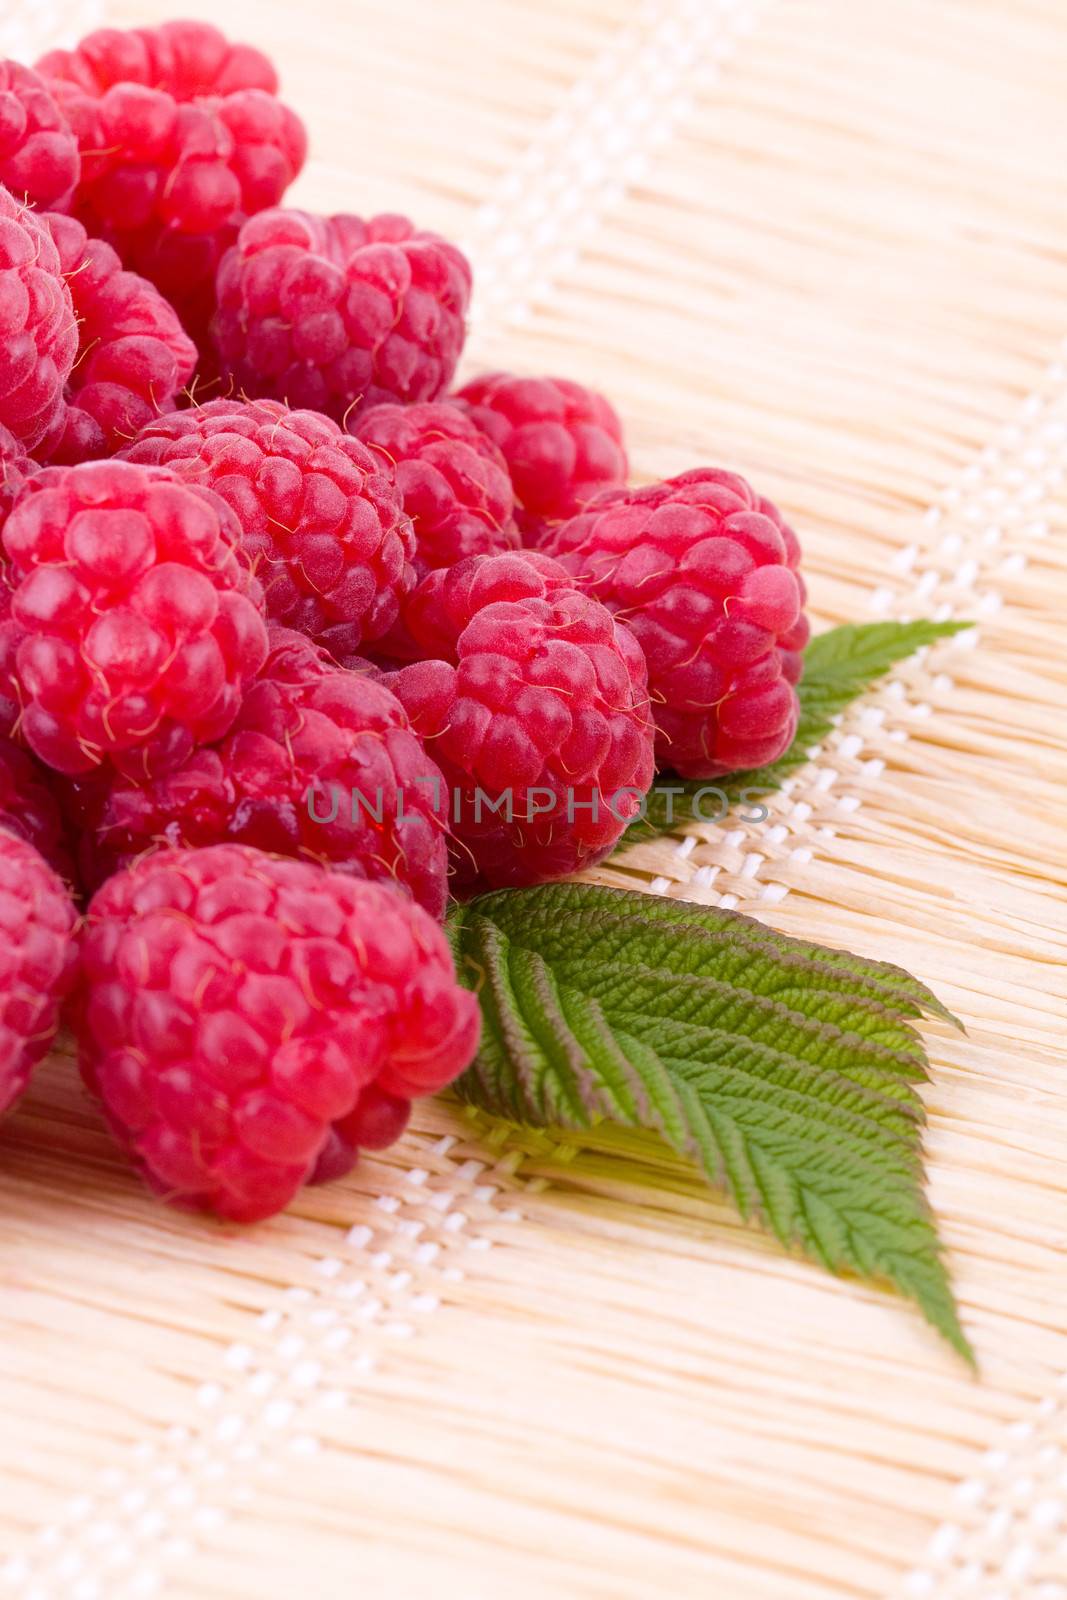 Closeup on fresh raspberries fruits on a straw mat